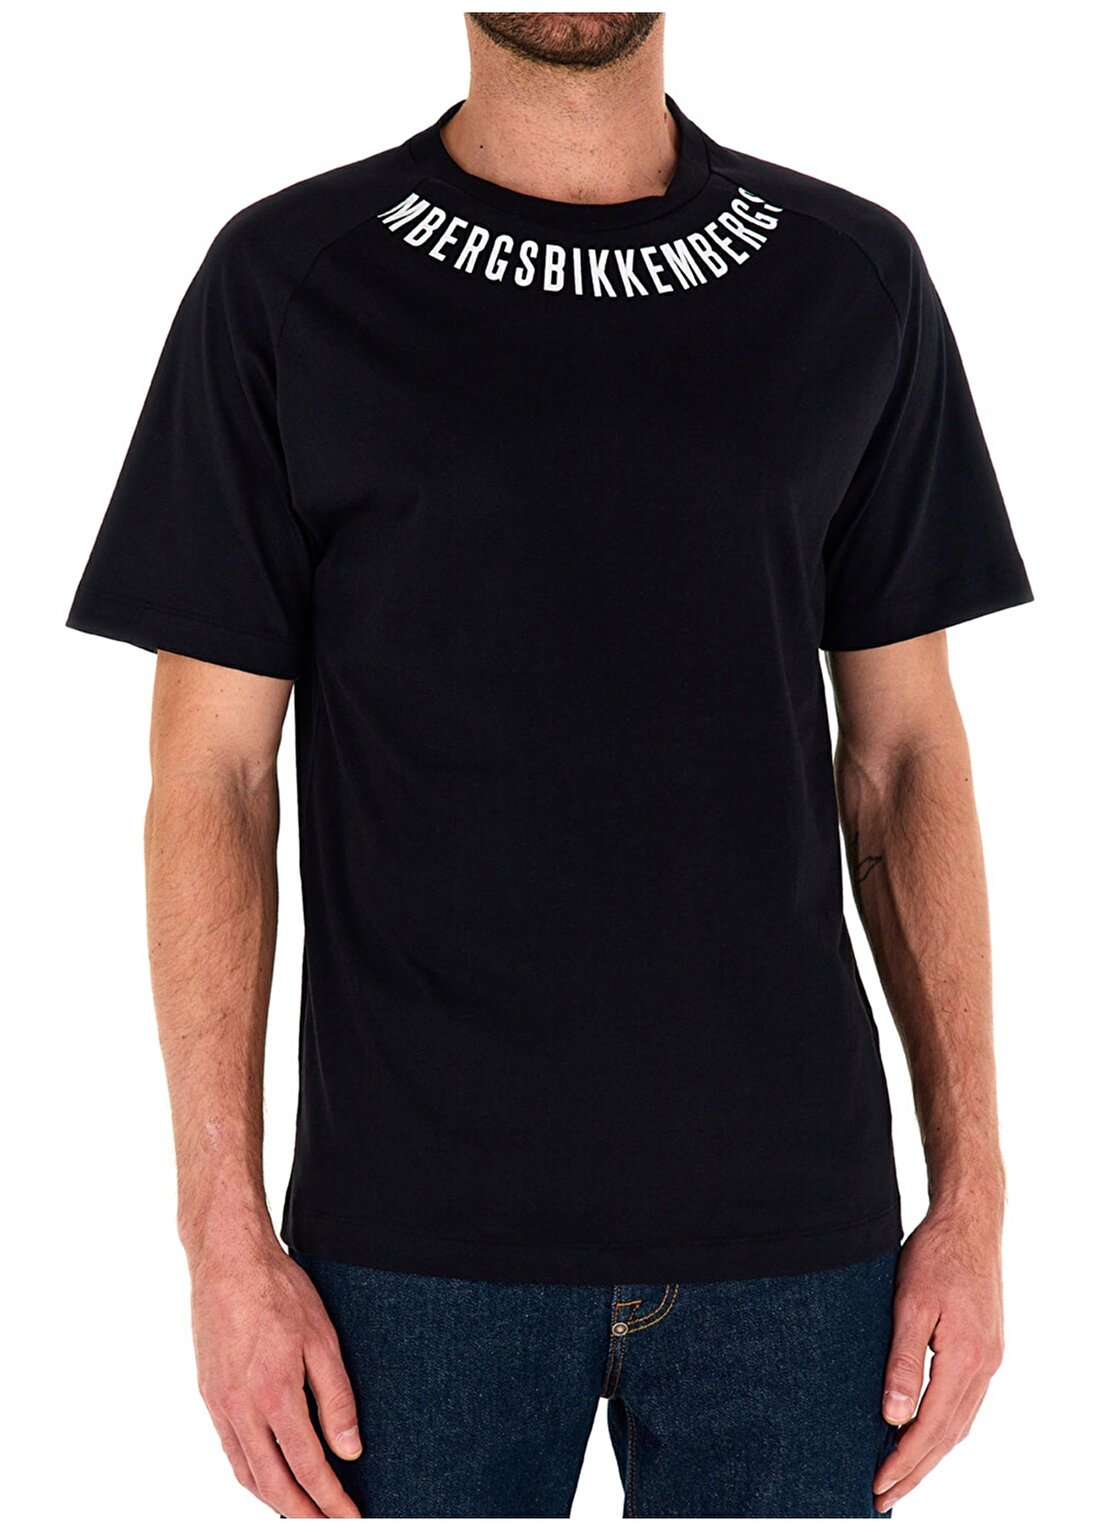 Bikkembergs Siyah Erkek T-Shirt C 4 149 01